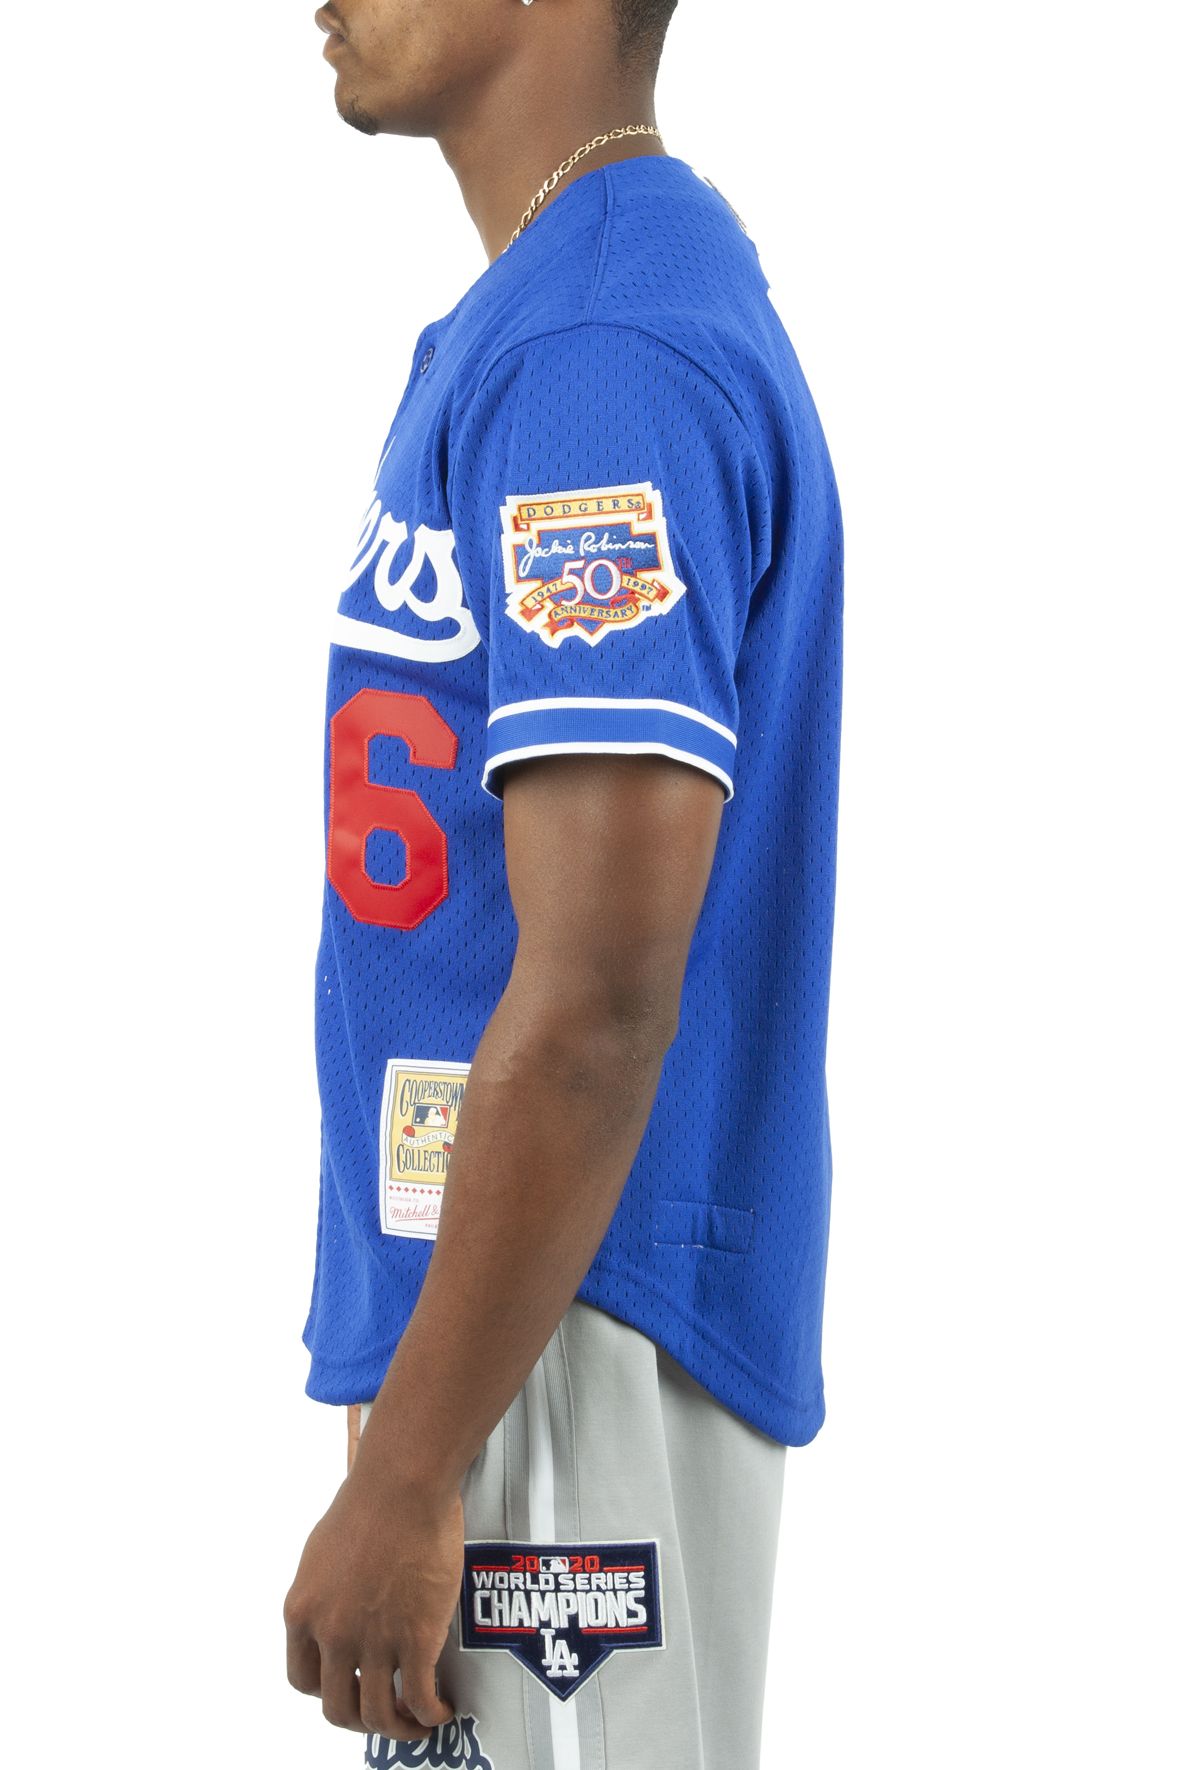 Dodgers Stadium Gear, Shirts, Clearance Nomo Dodgers Tshirt Xl